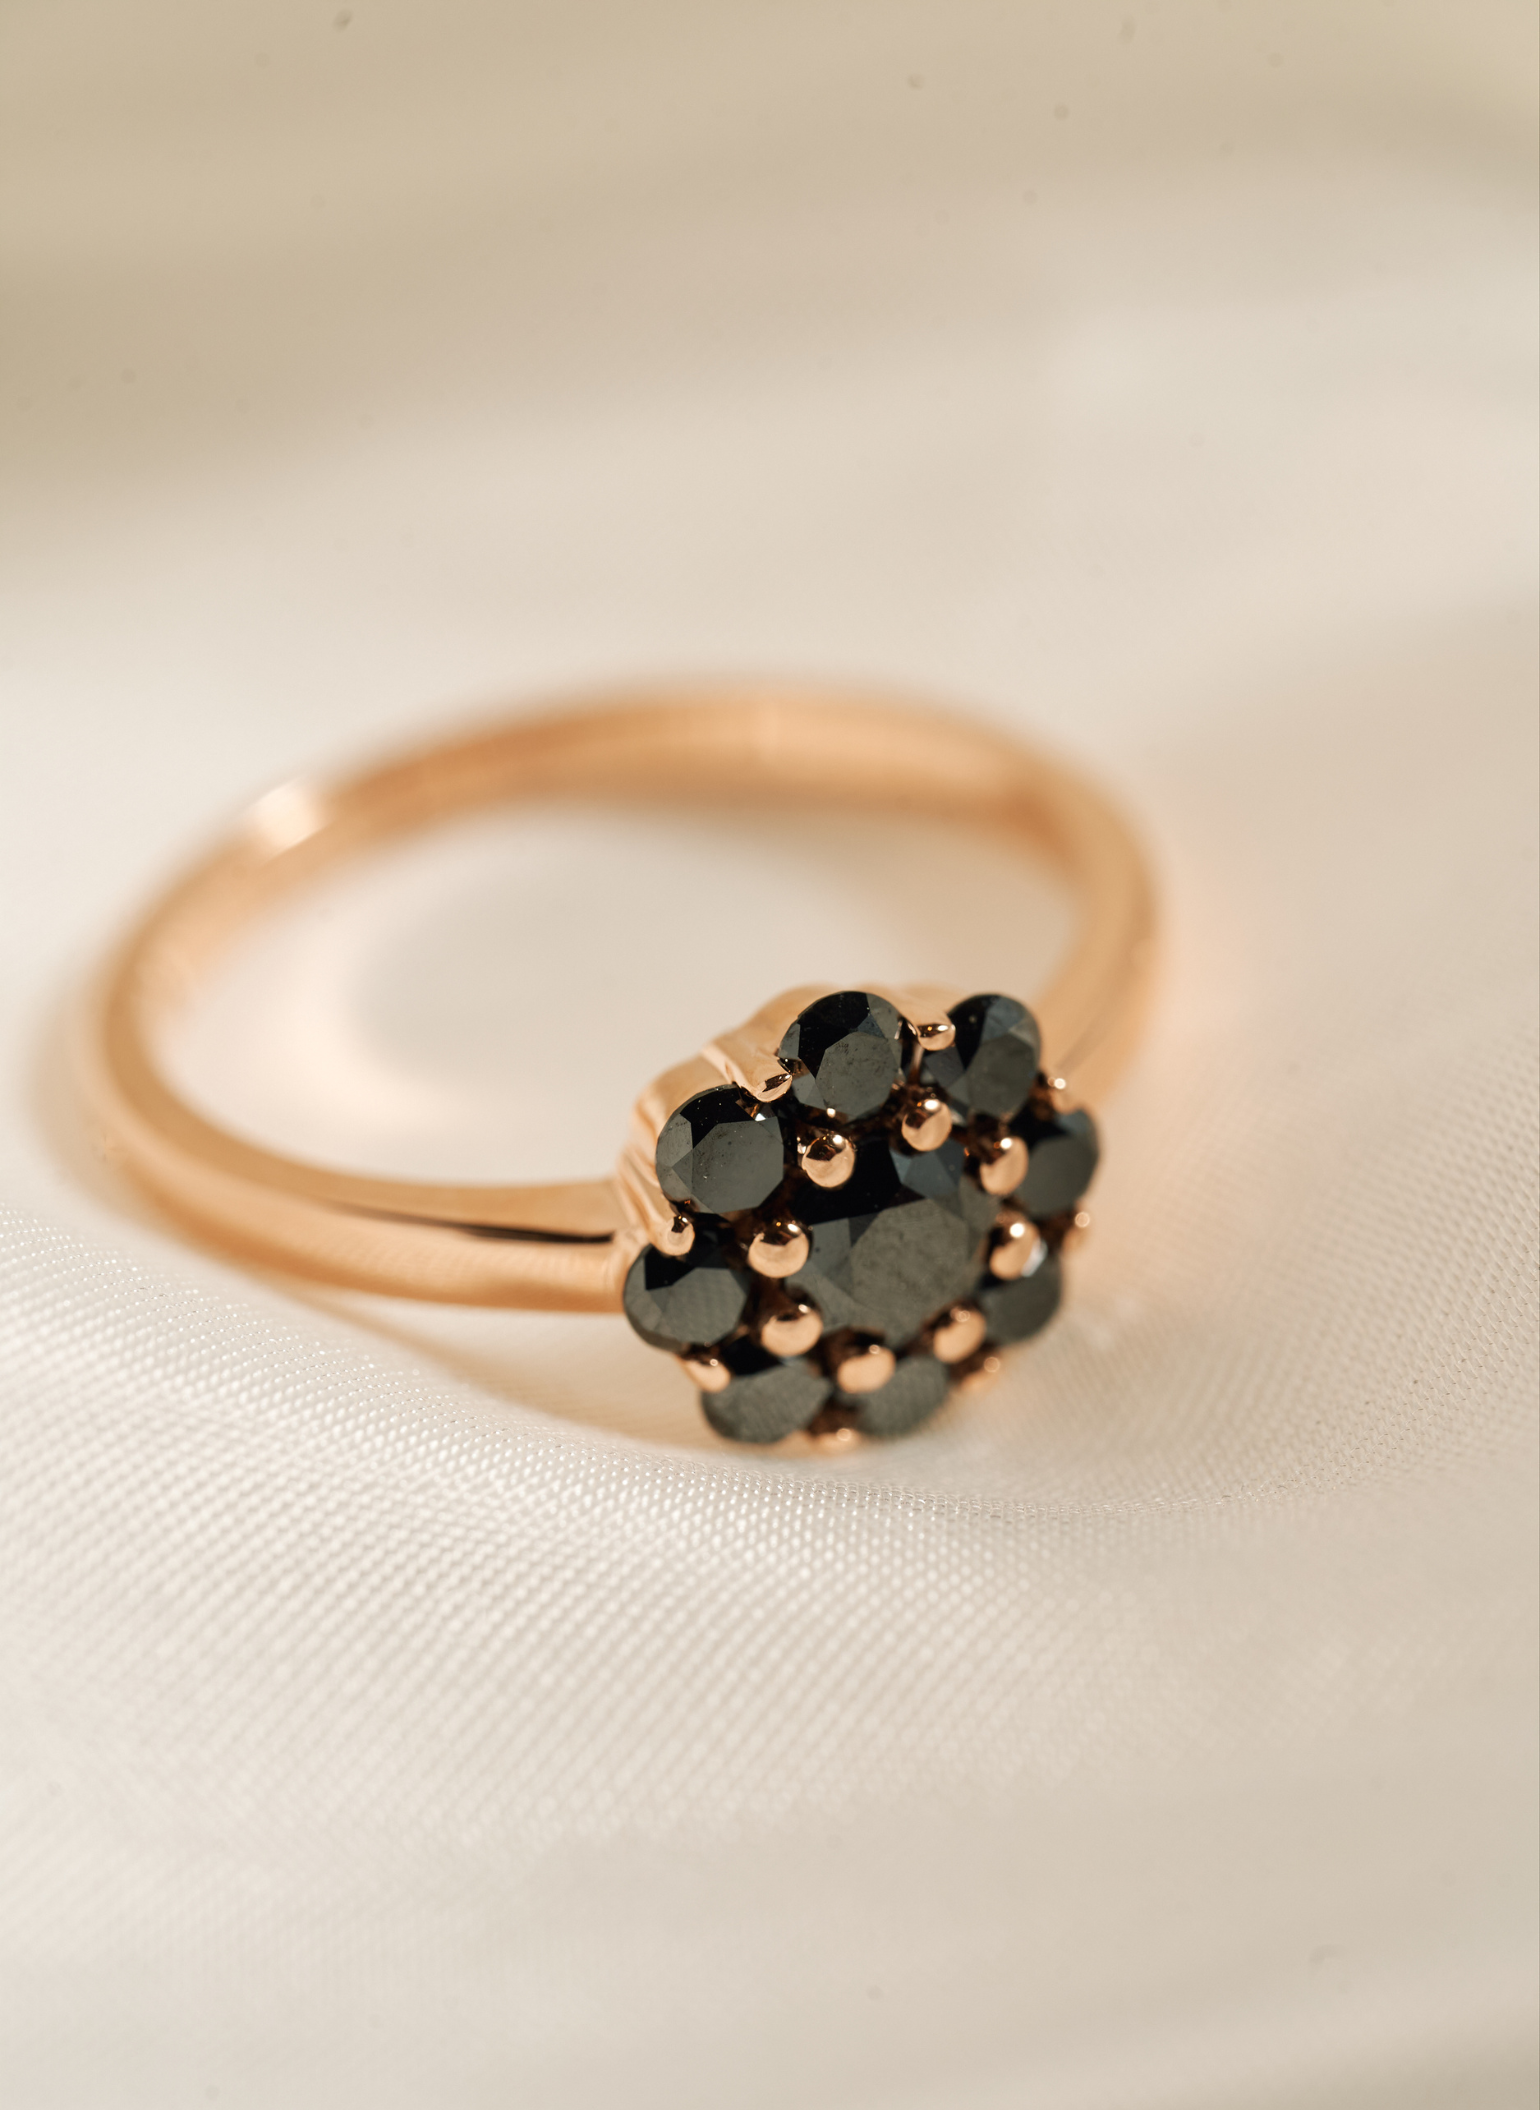 Gold rosette ring with black diamonds